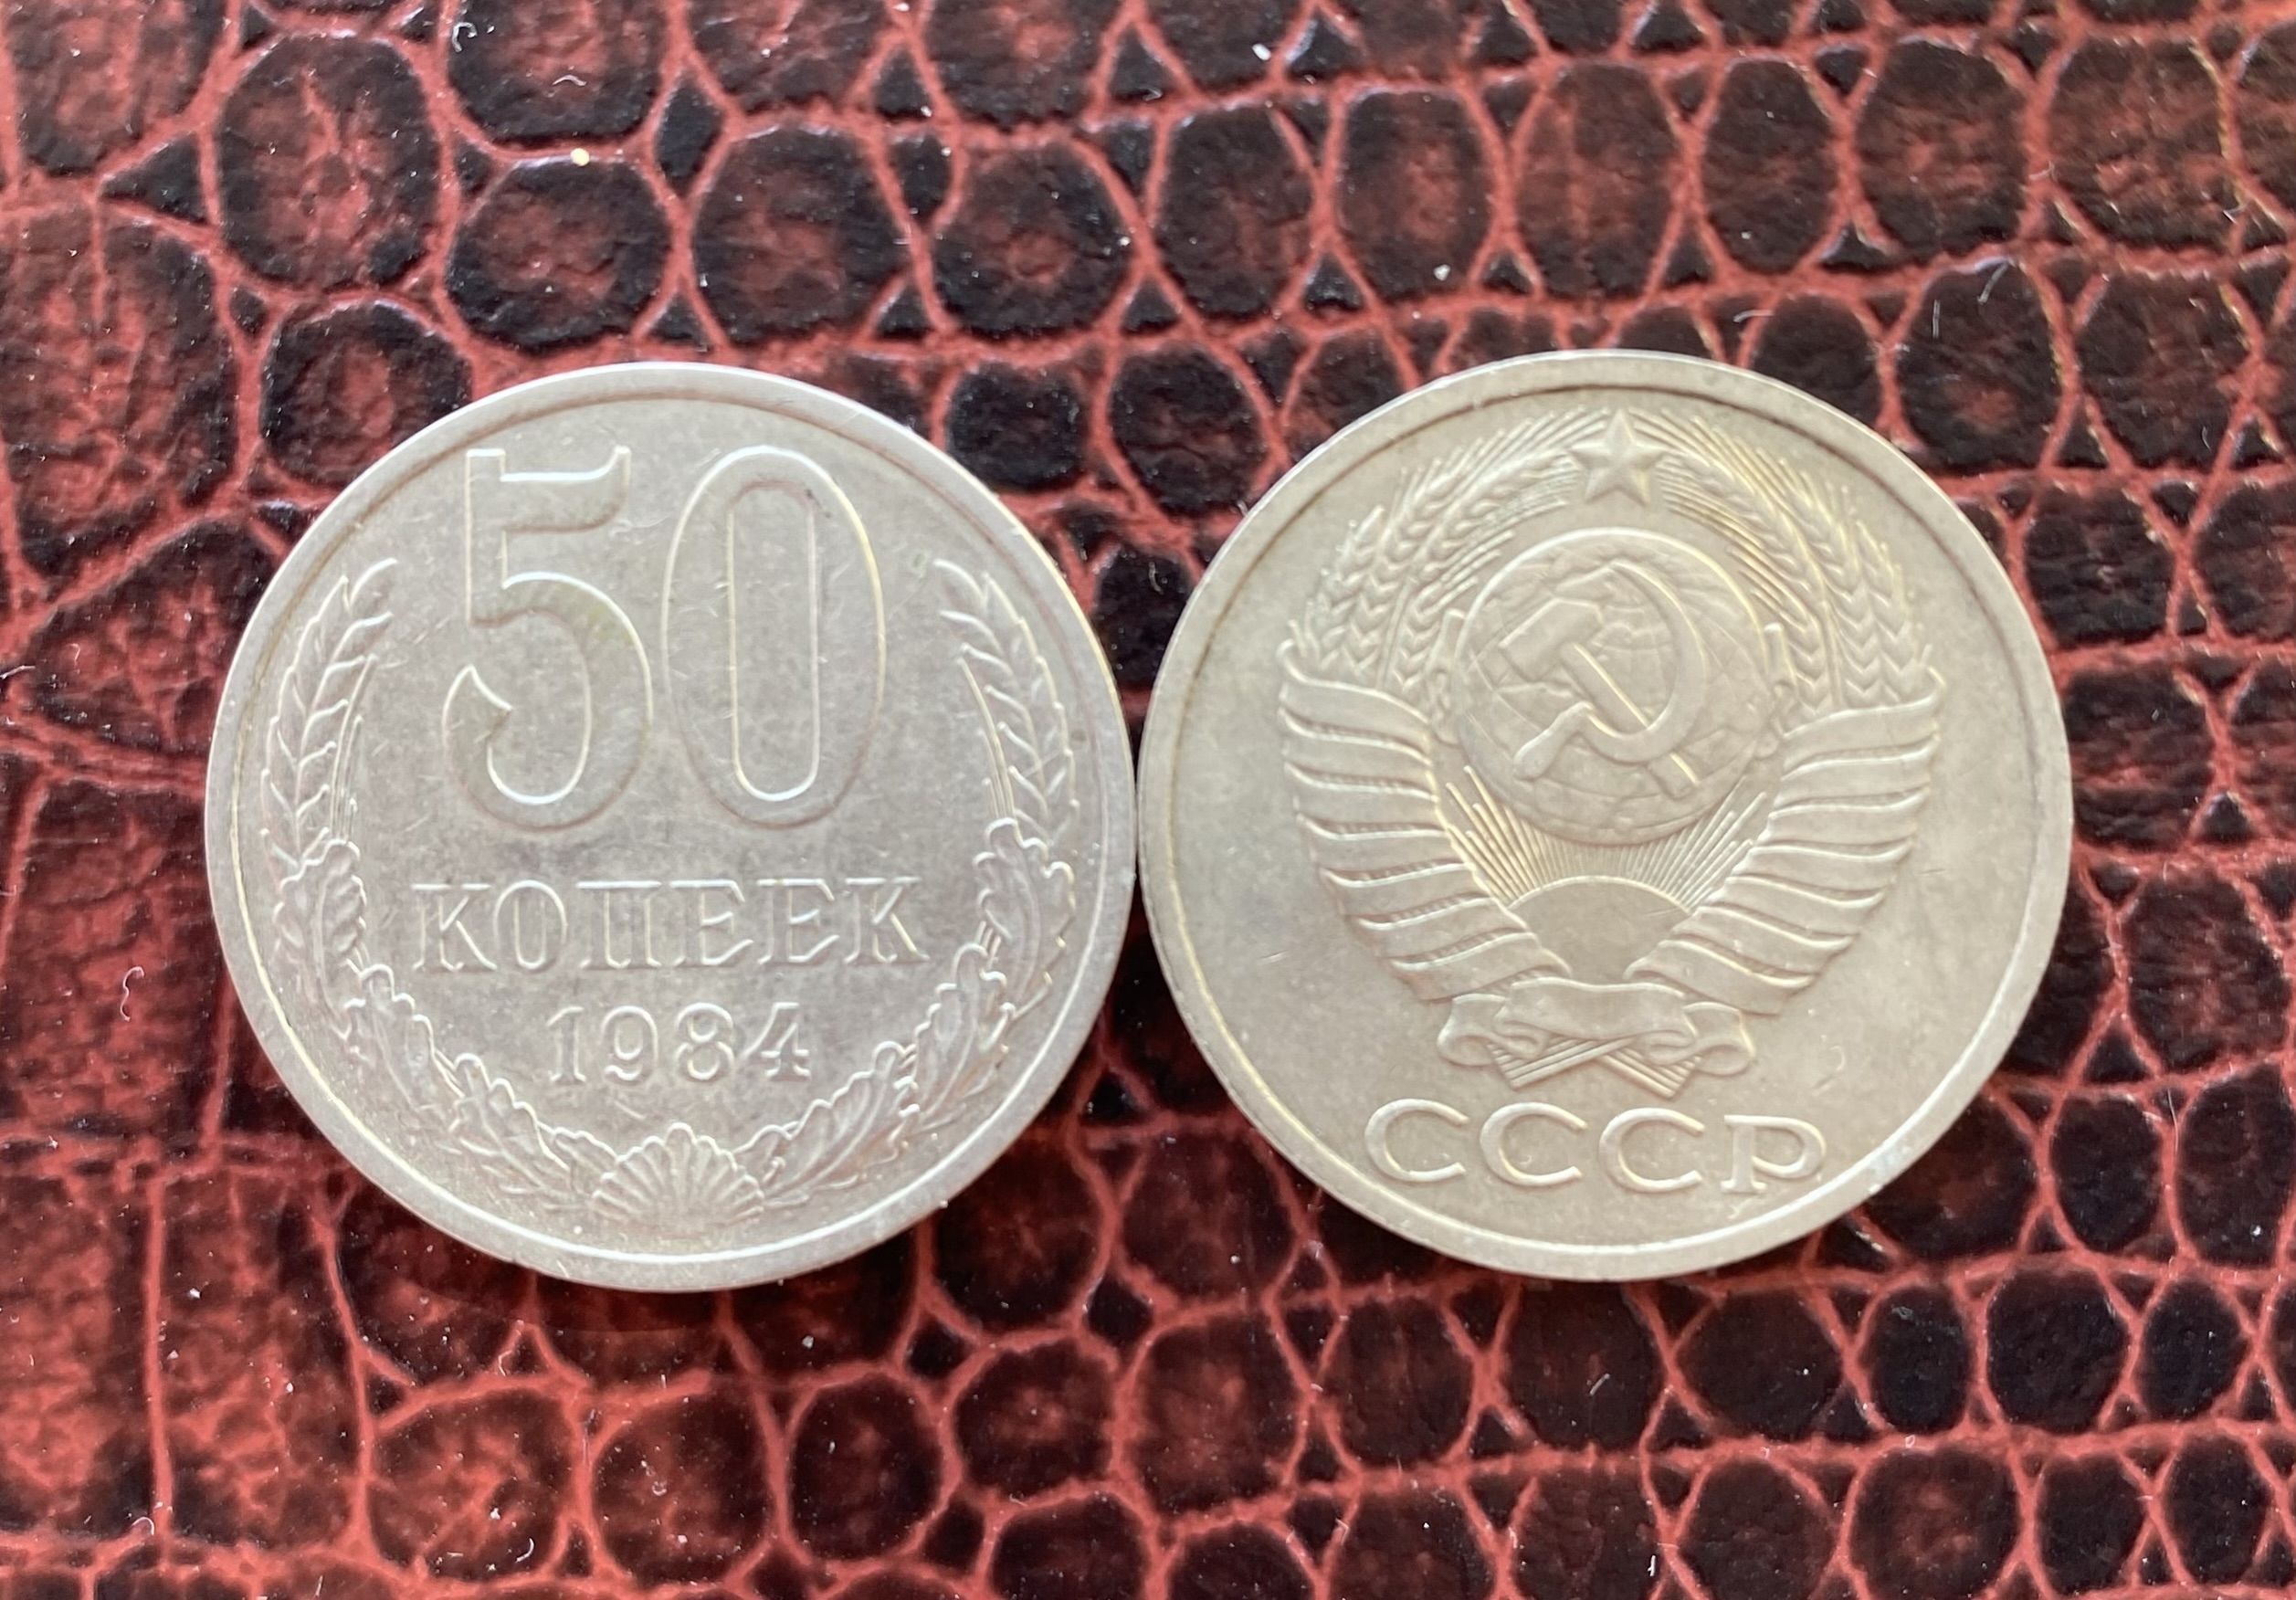 15 копеек 1984 года. Монета 50 копеек 1984 s162101.